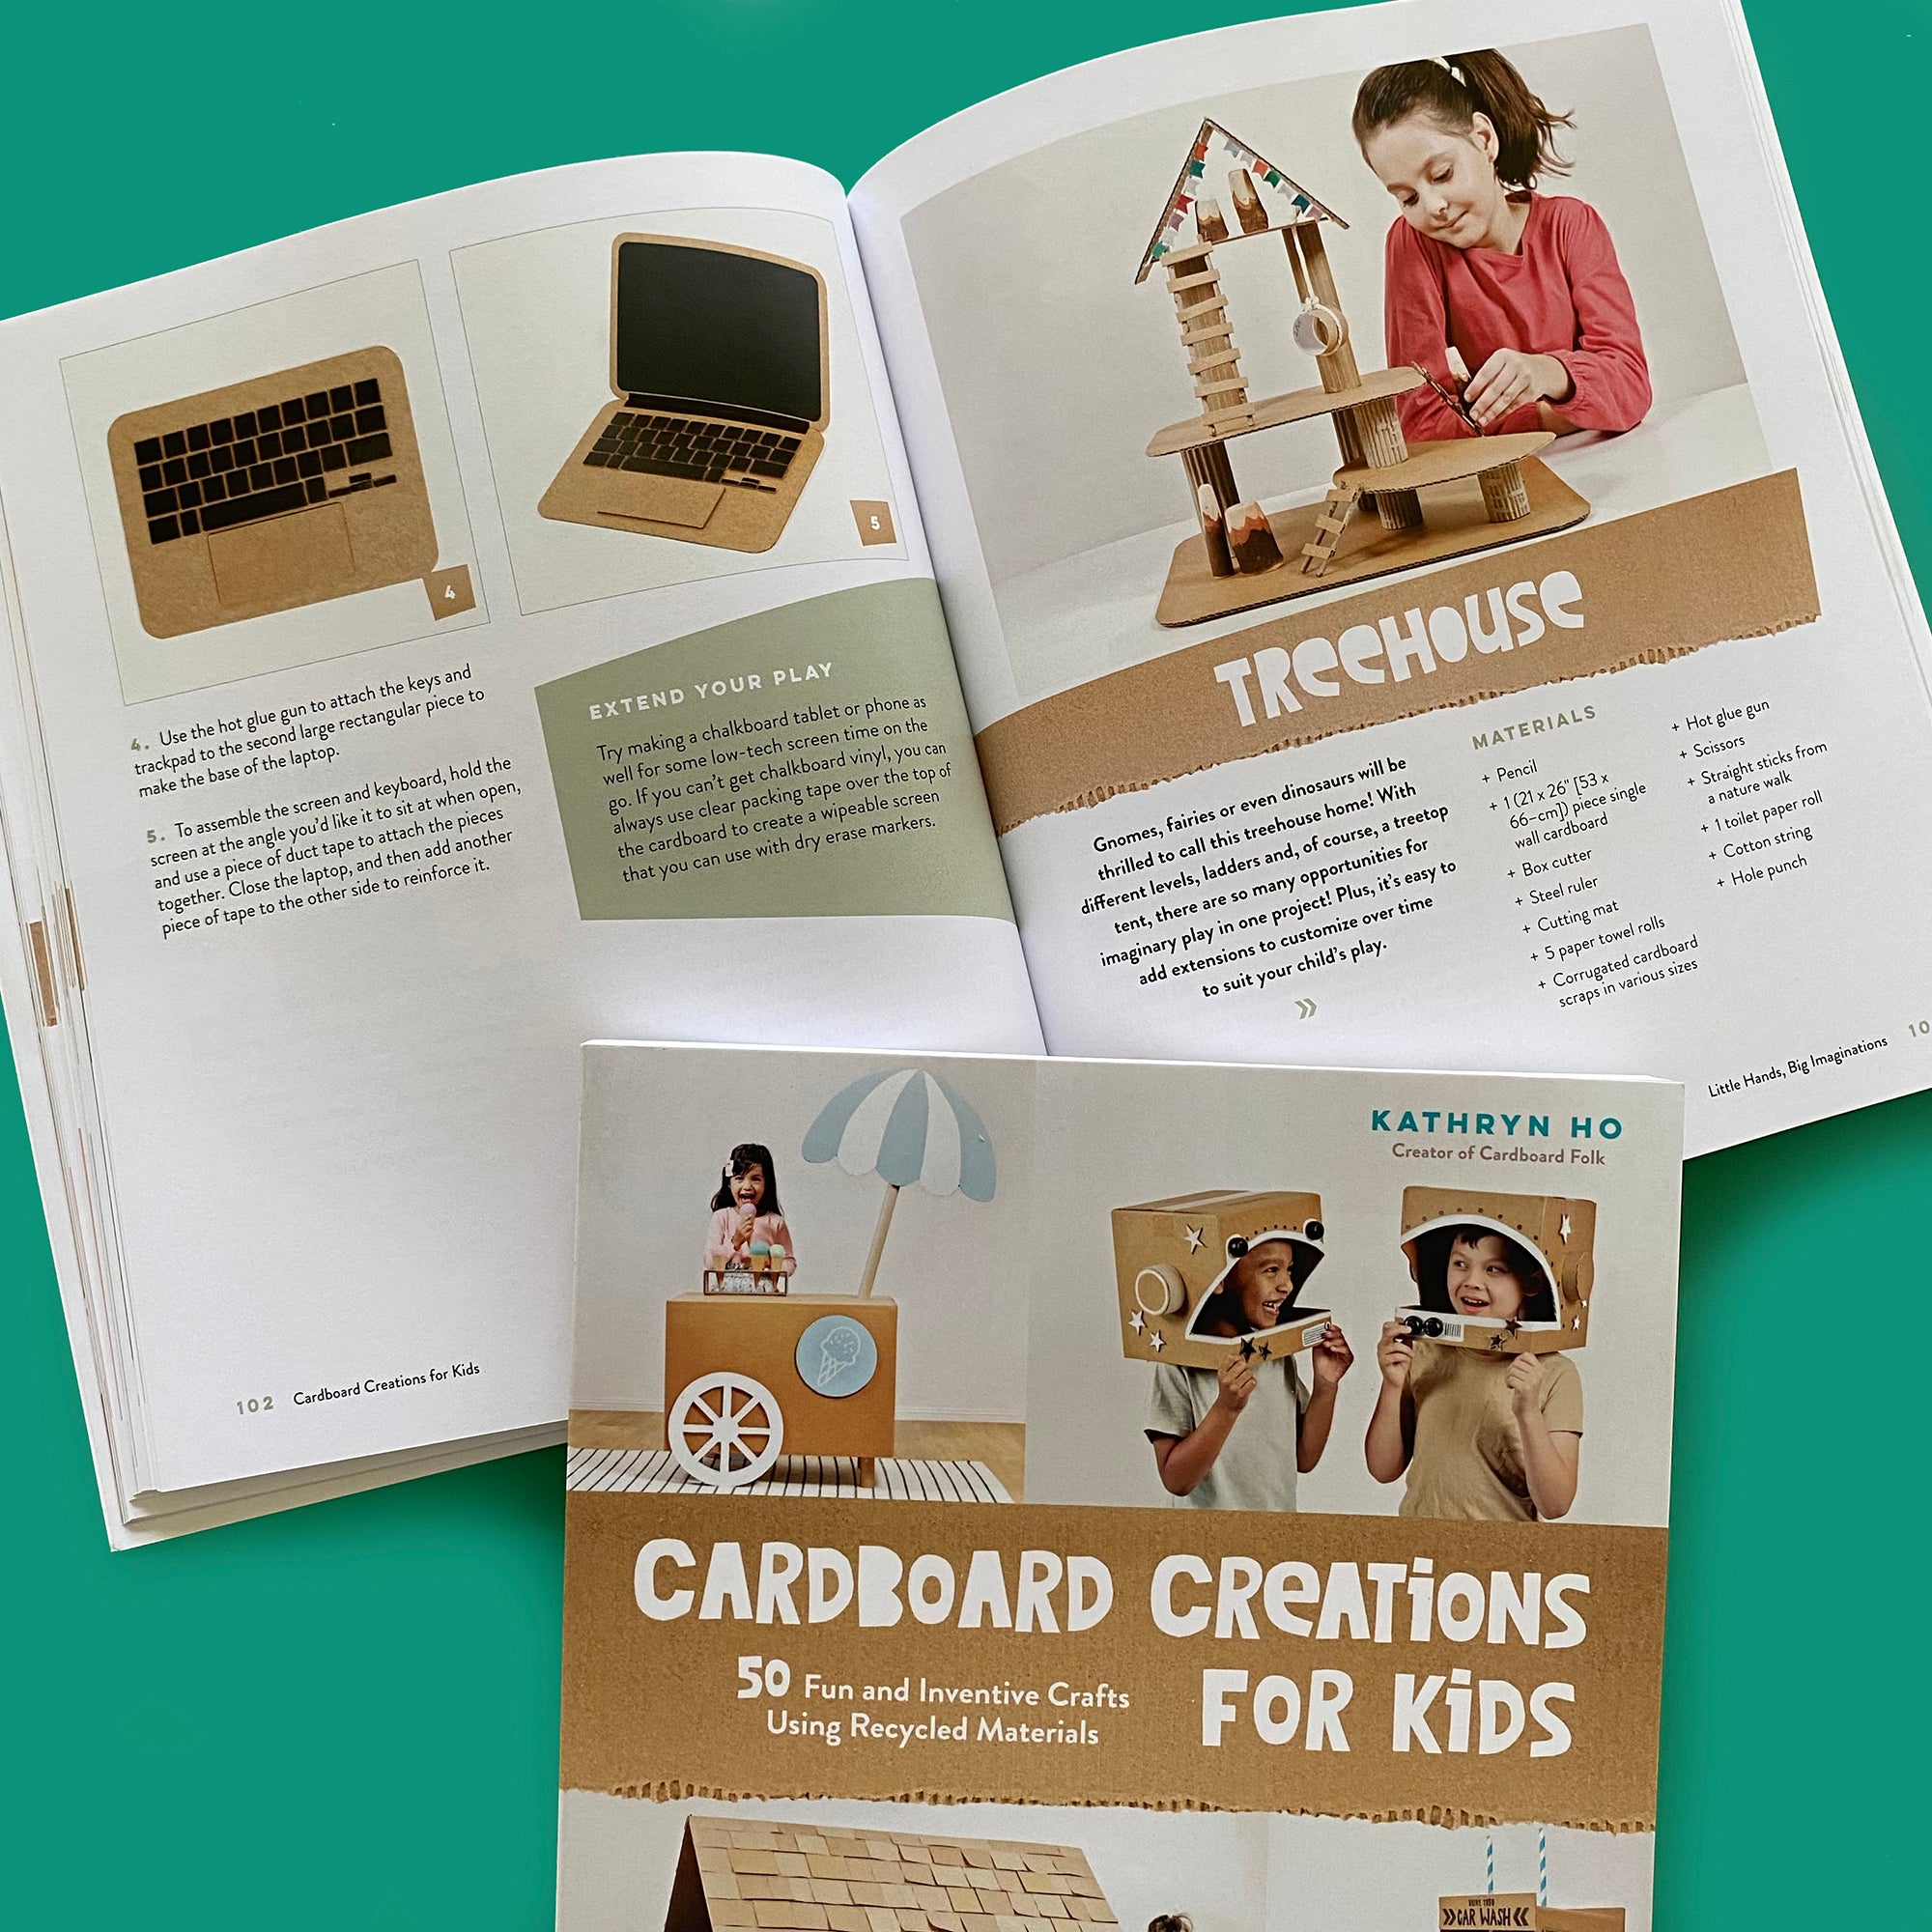 Cardboard Creations for Kids